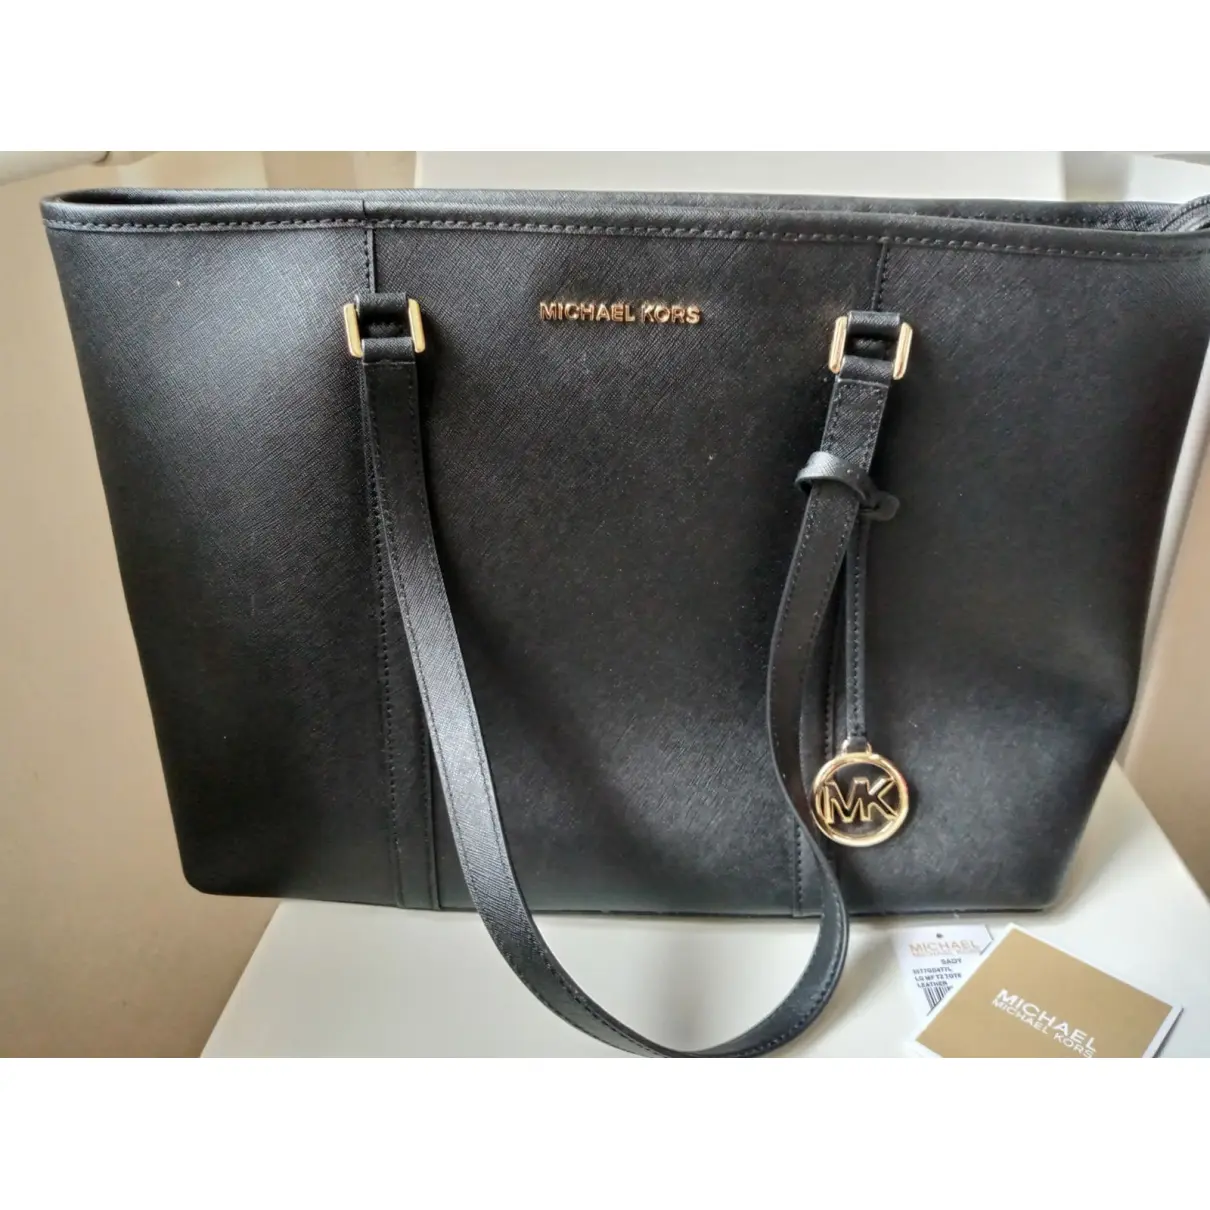 Buy Michael Kors Sady leather bag online